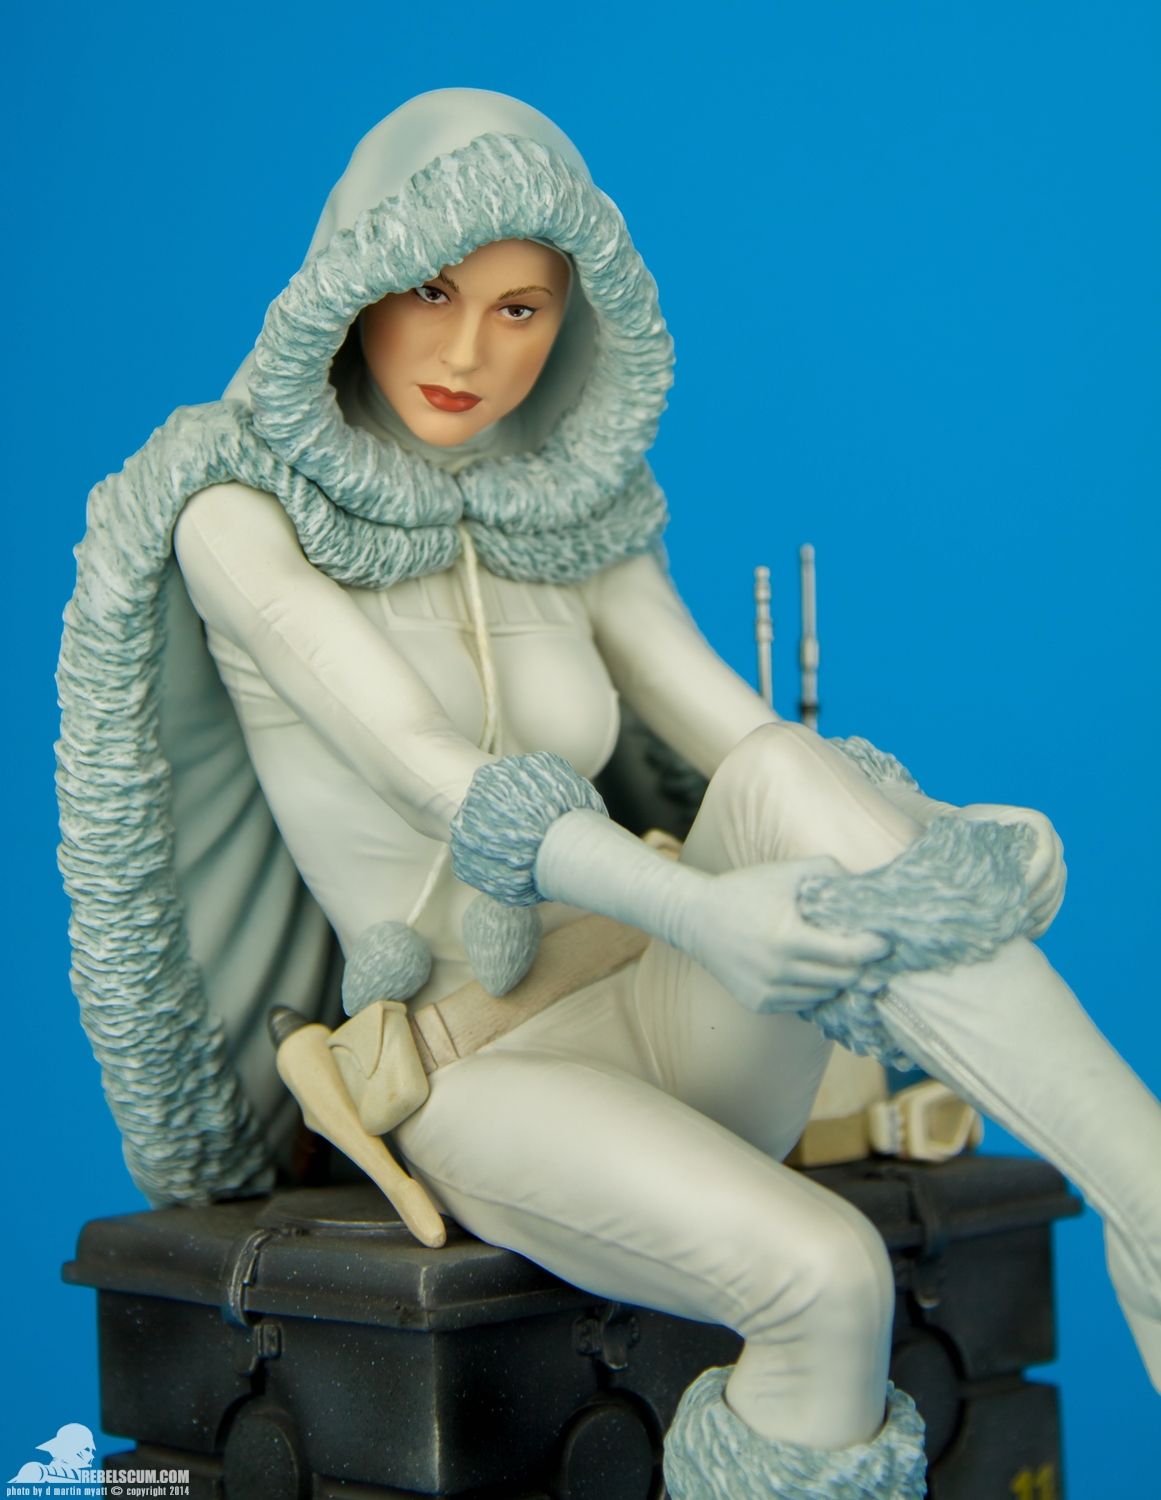 Padme-Amidala-Snowbunny-Statue-Gentle-Giant-Ltd-009.jpg